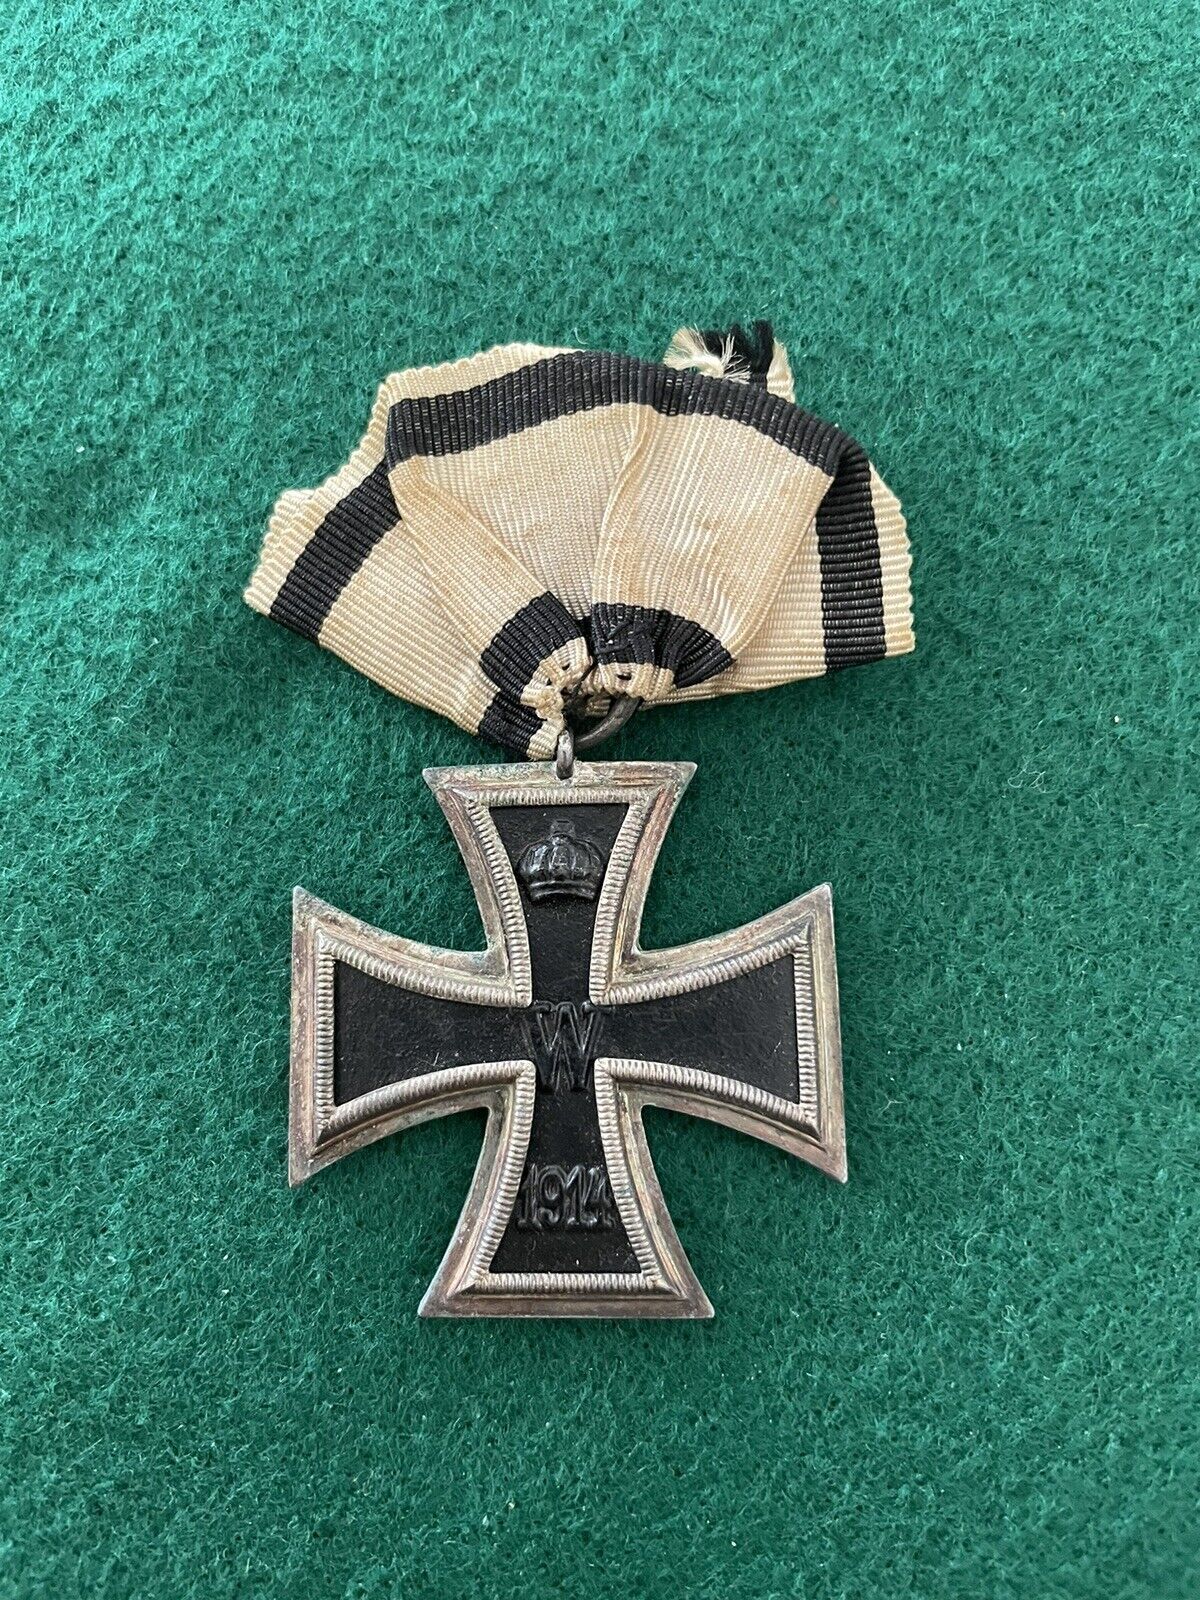 WW1 Original German Civilian iron Cross second-class.